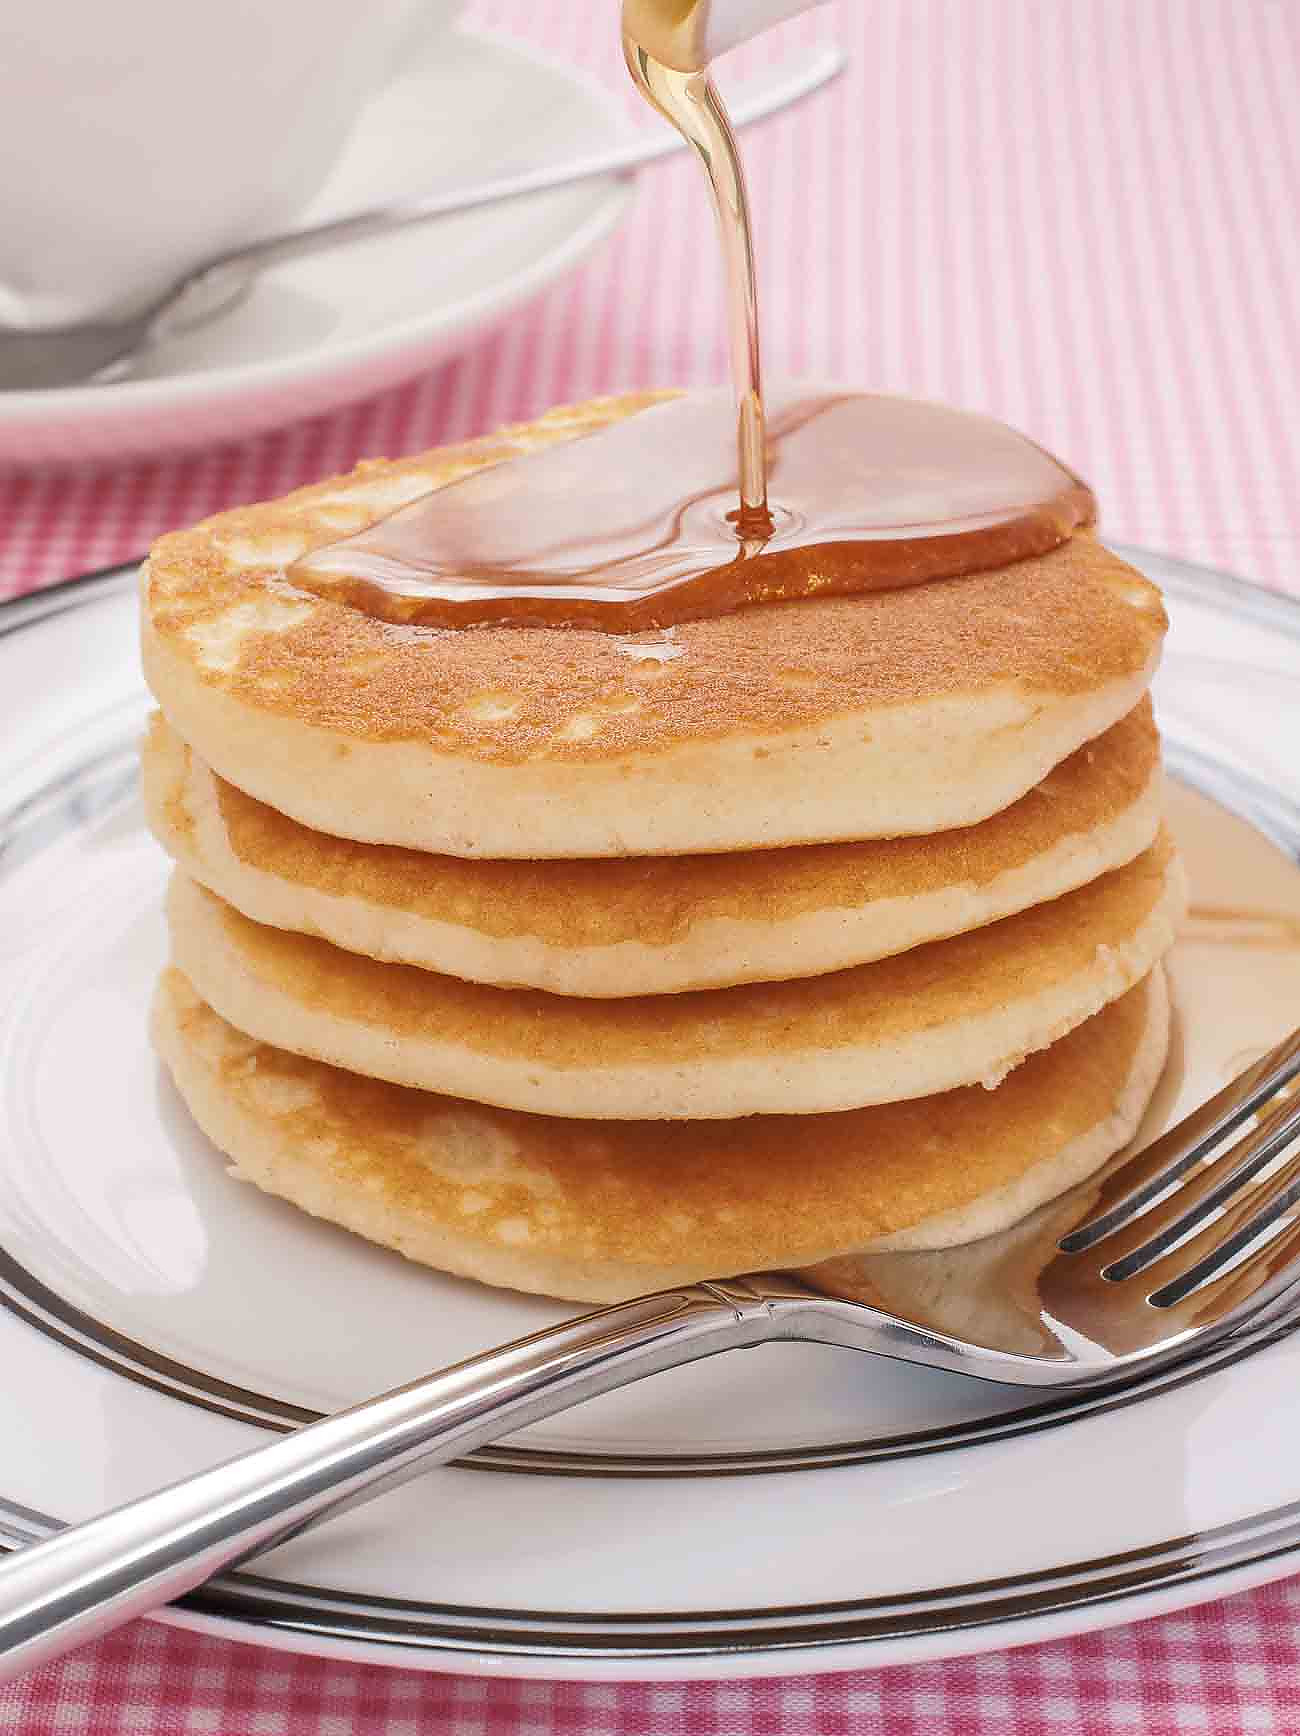 My favorite buttermilk pancakes